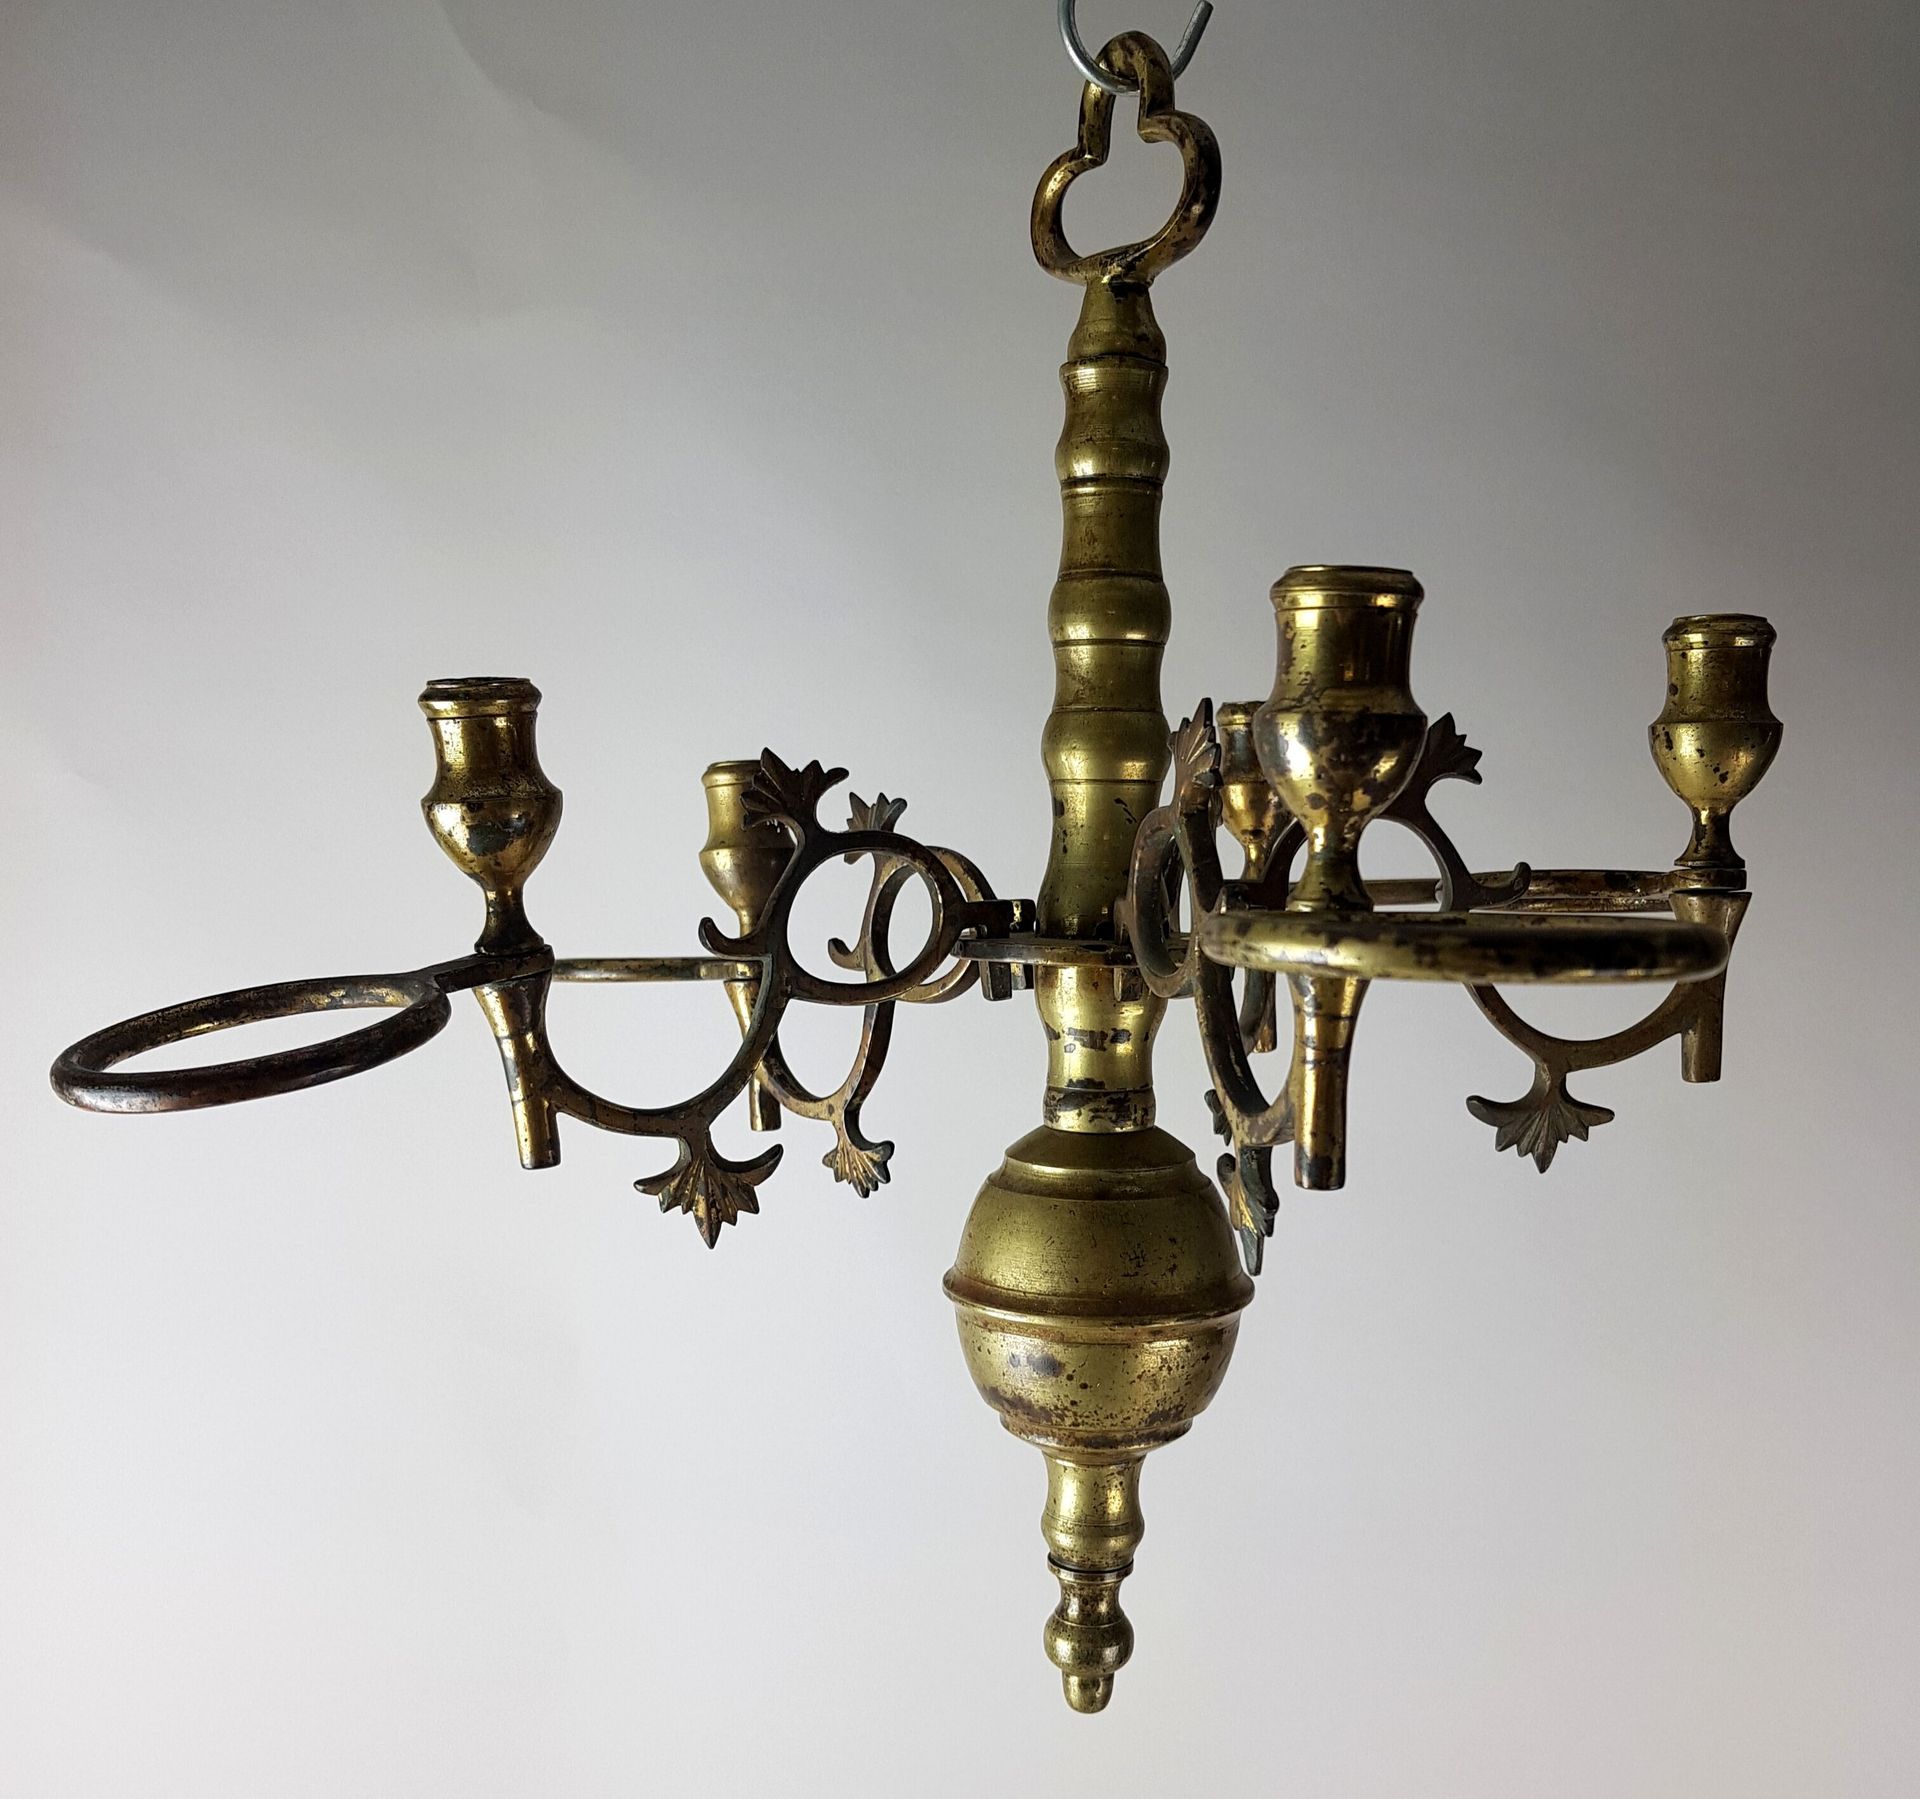 Null Antique bronze chandelier. H 40 cm - diameter 50 cm - wear and tear